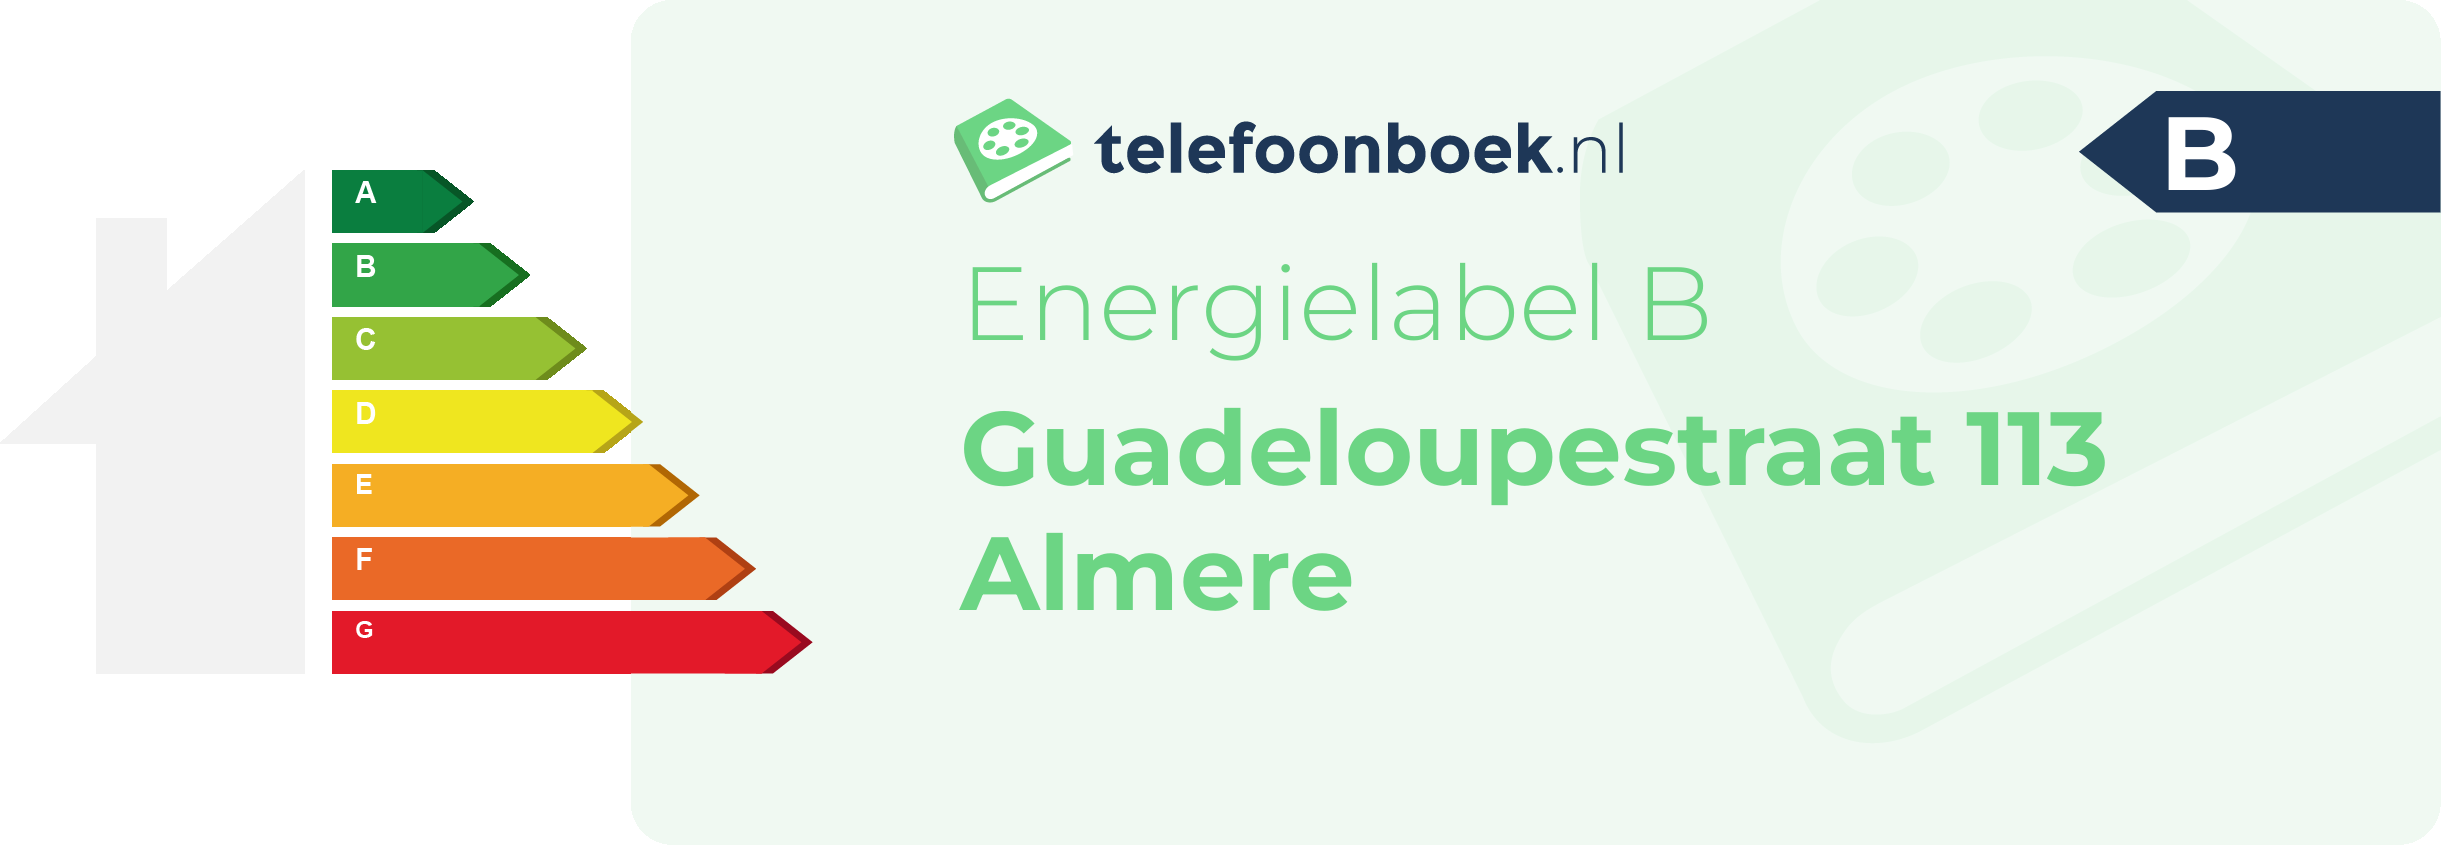 Energielabel Guadeloupestraat 113 Almere